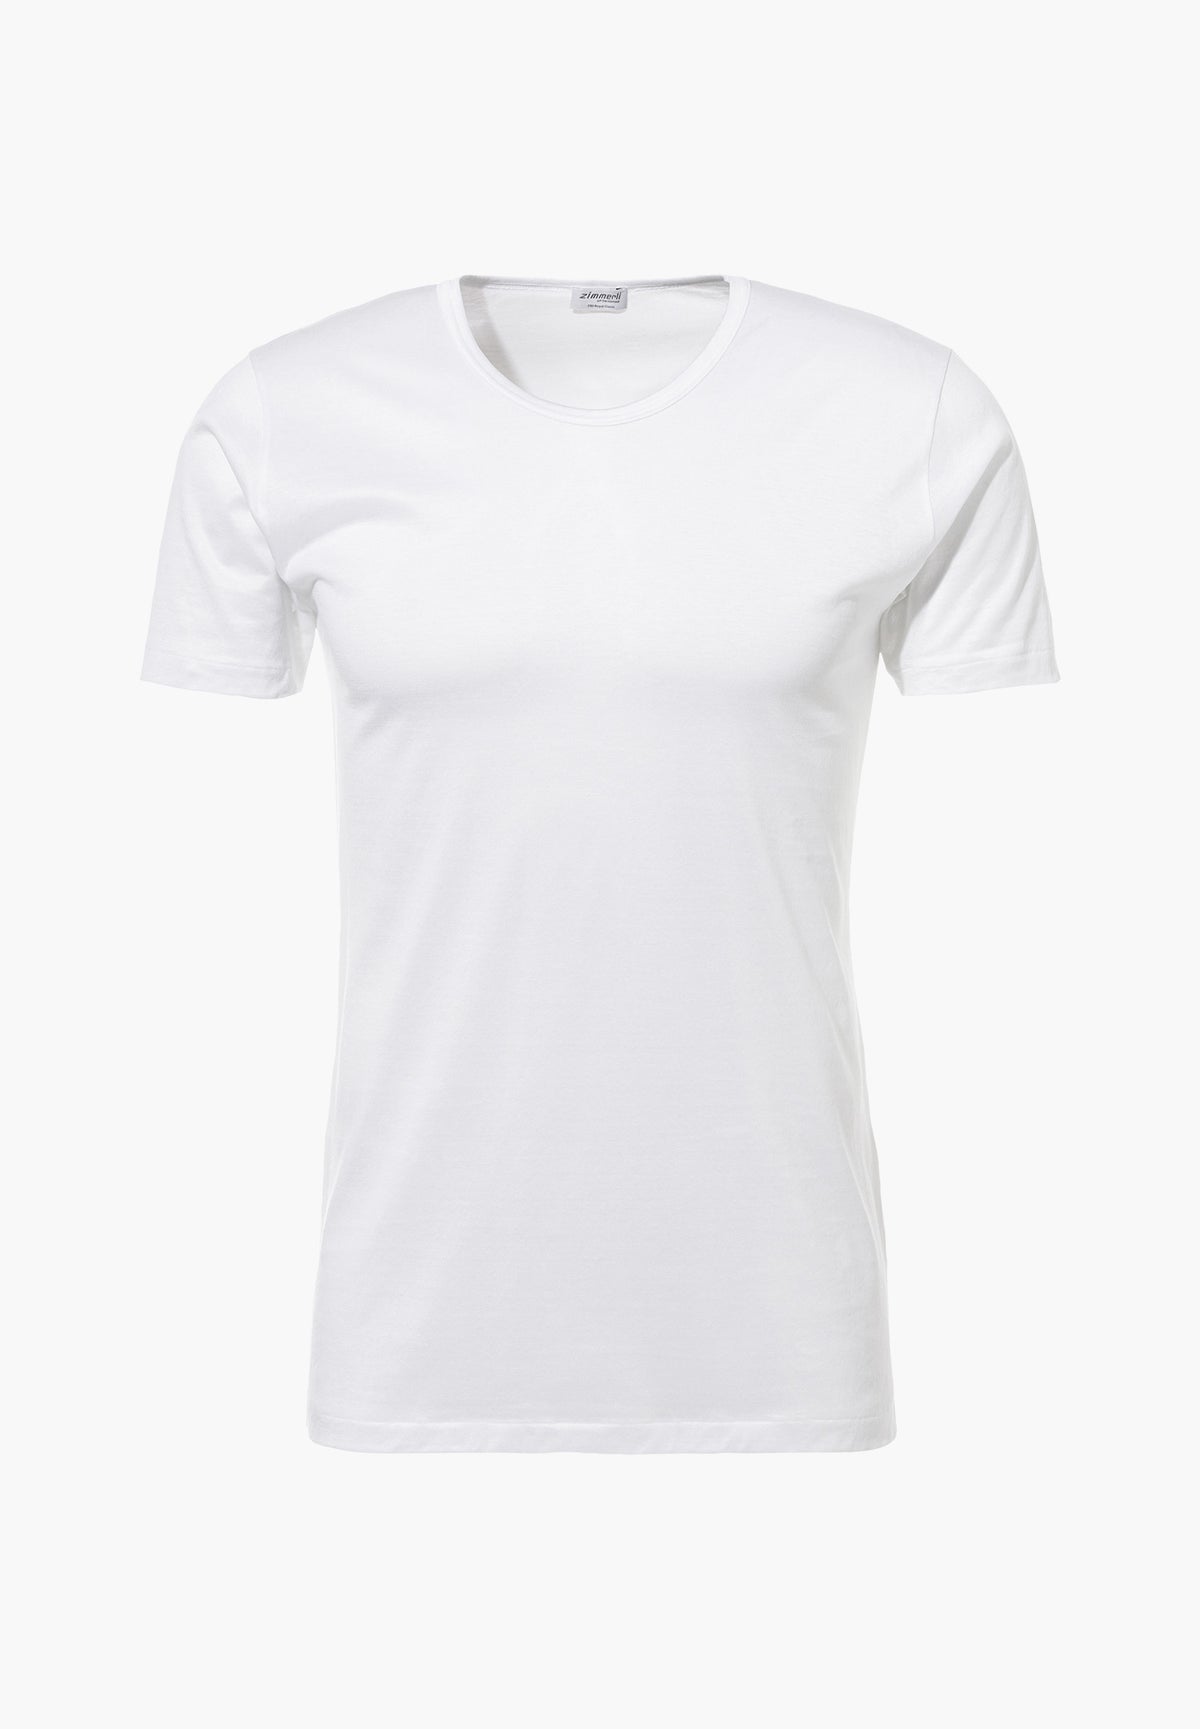 Royal Classic | T-Shirt kurzarm - white